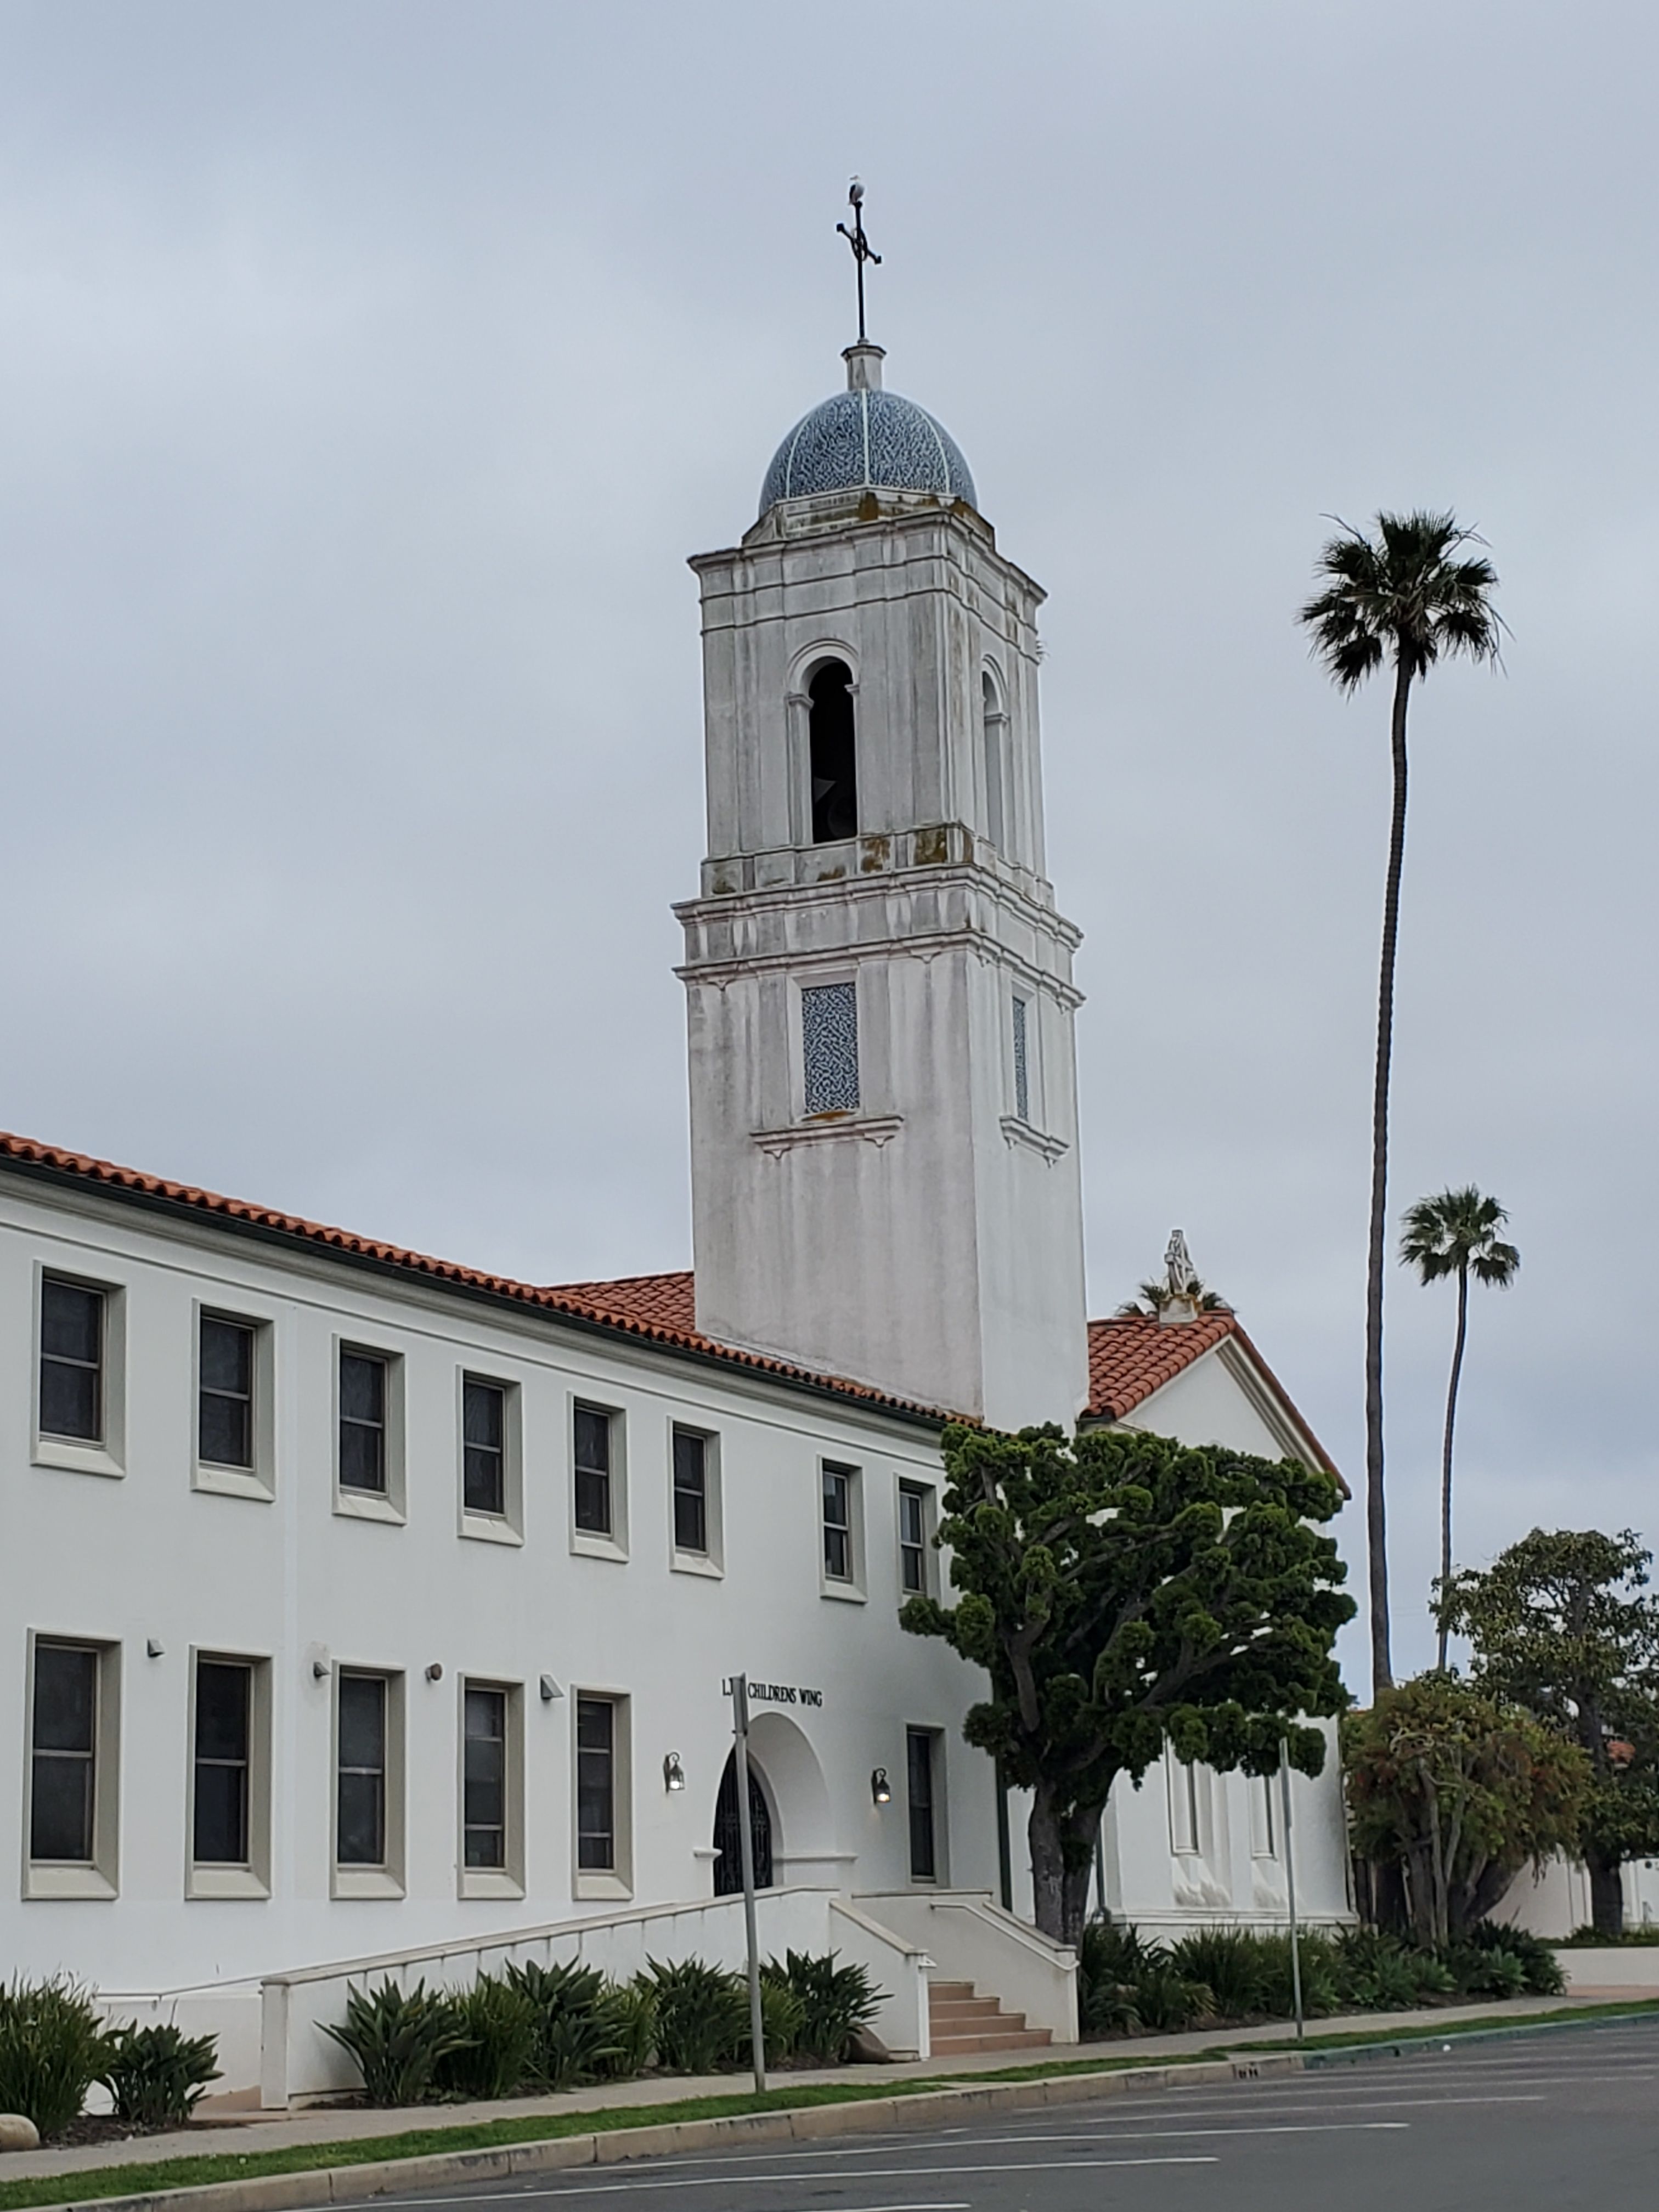 Planned wireless antennas in La Jolla Presbyterian Church tower raise concerns